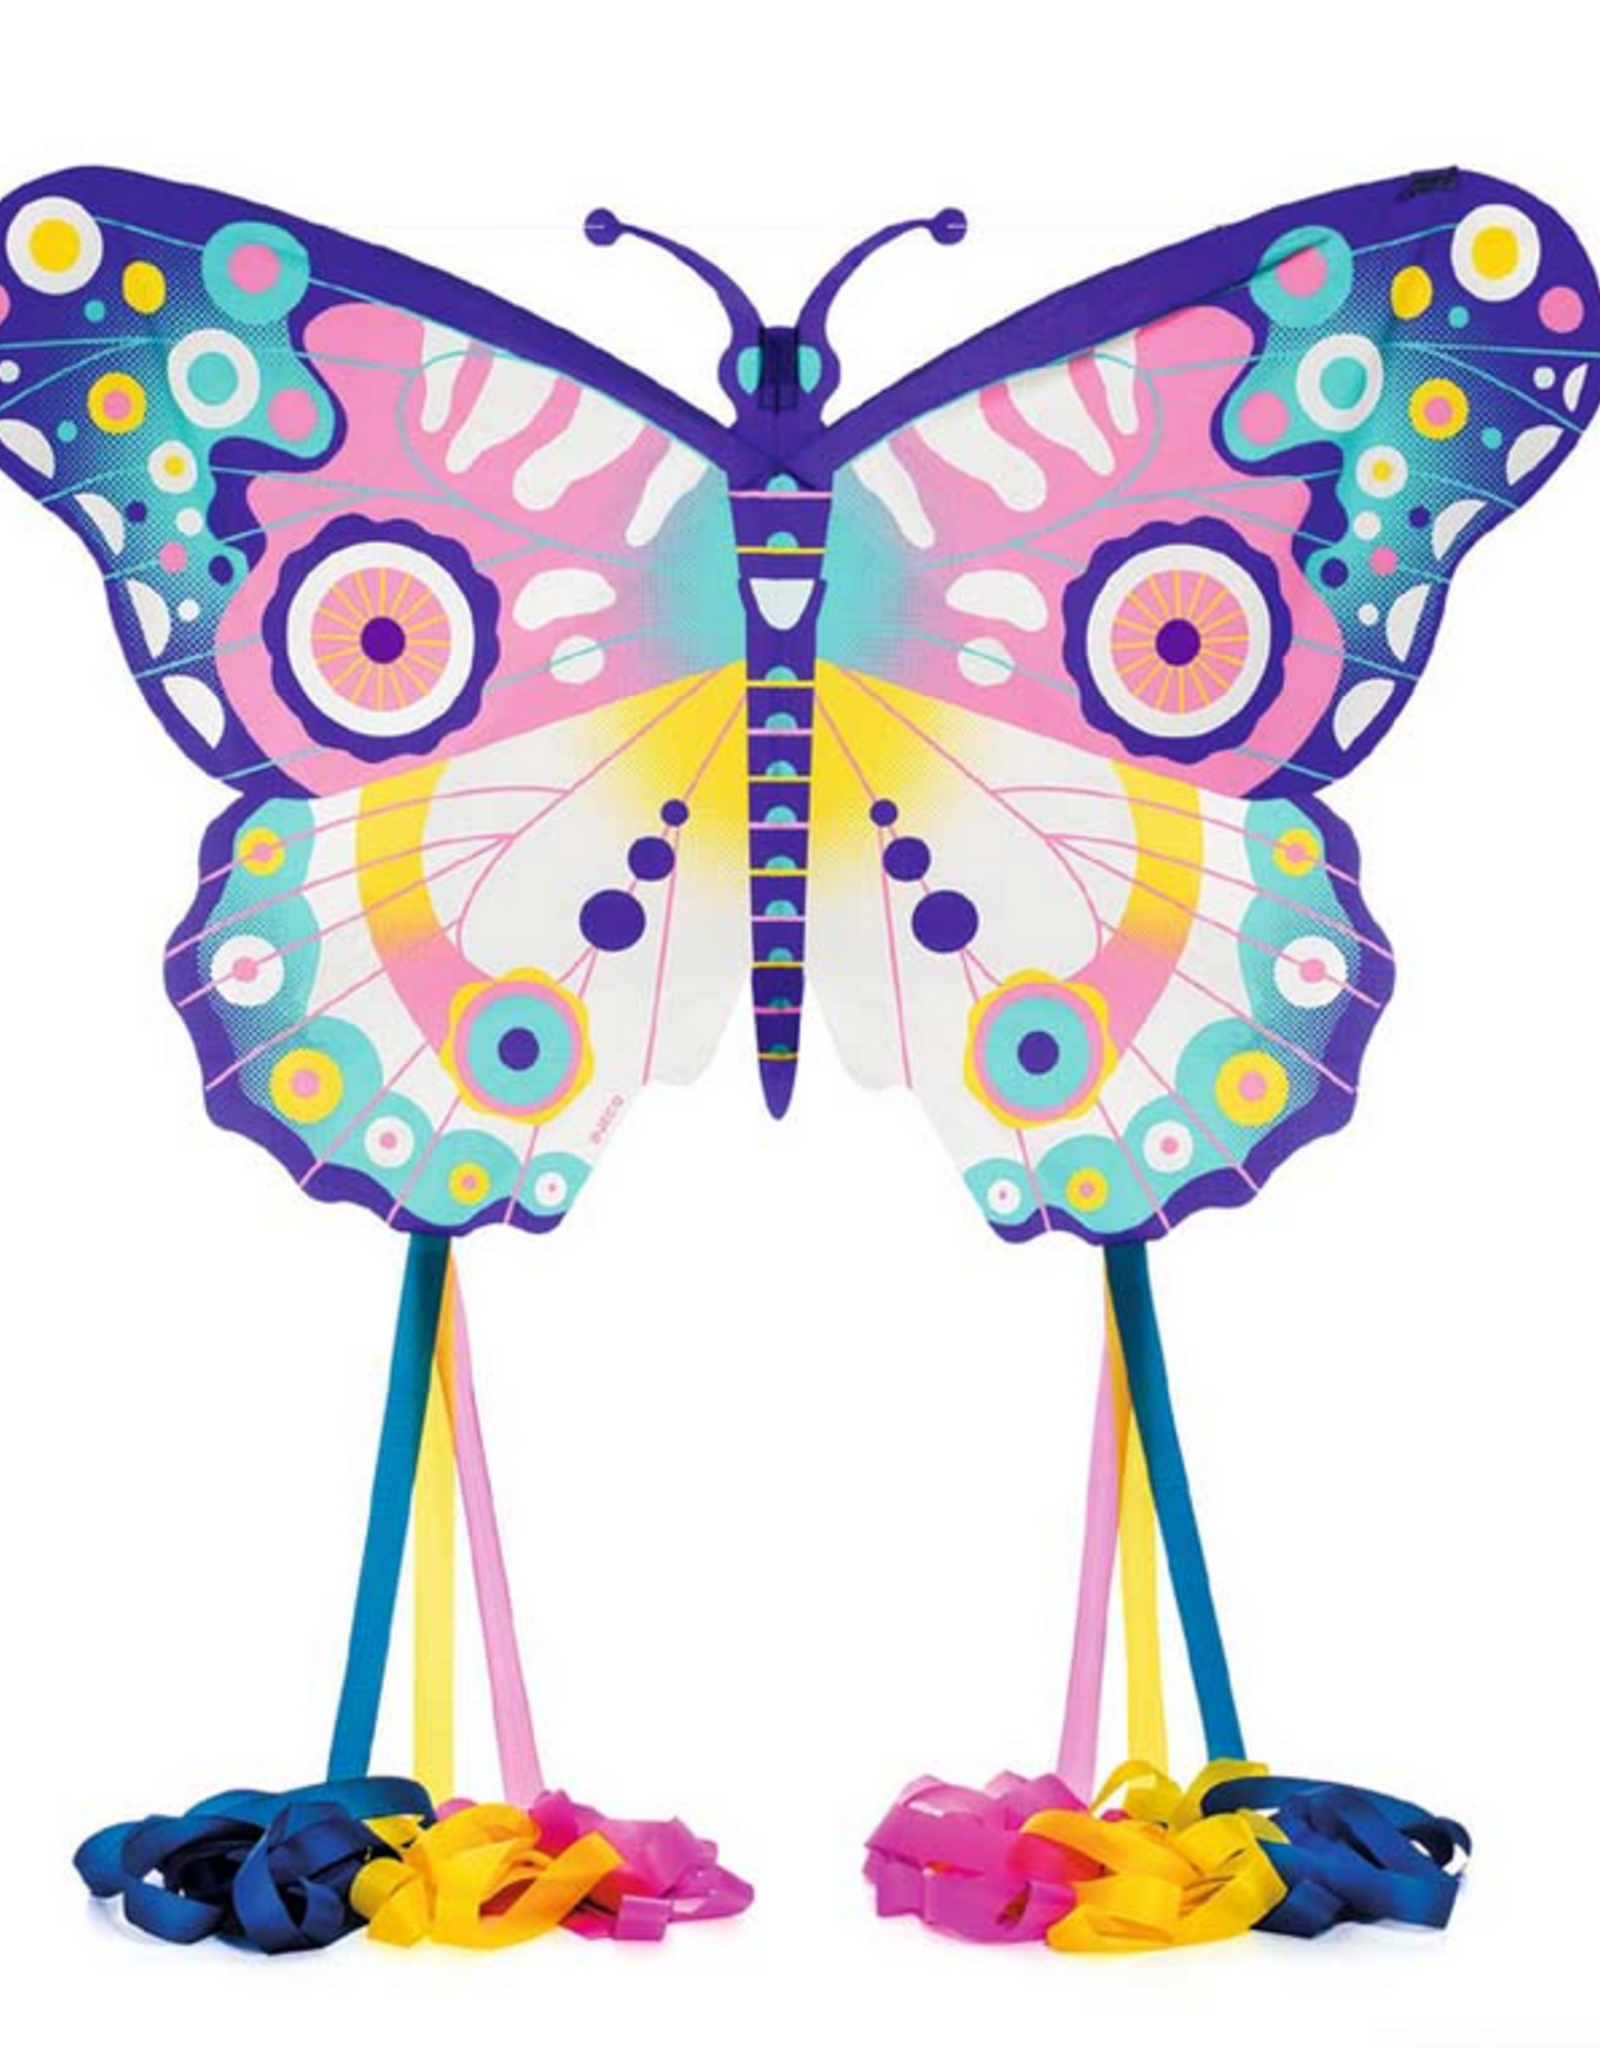 Djeco Kite: Maxi Butterfly